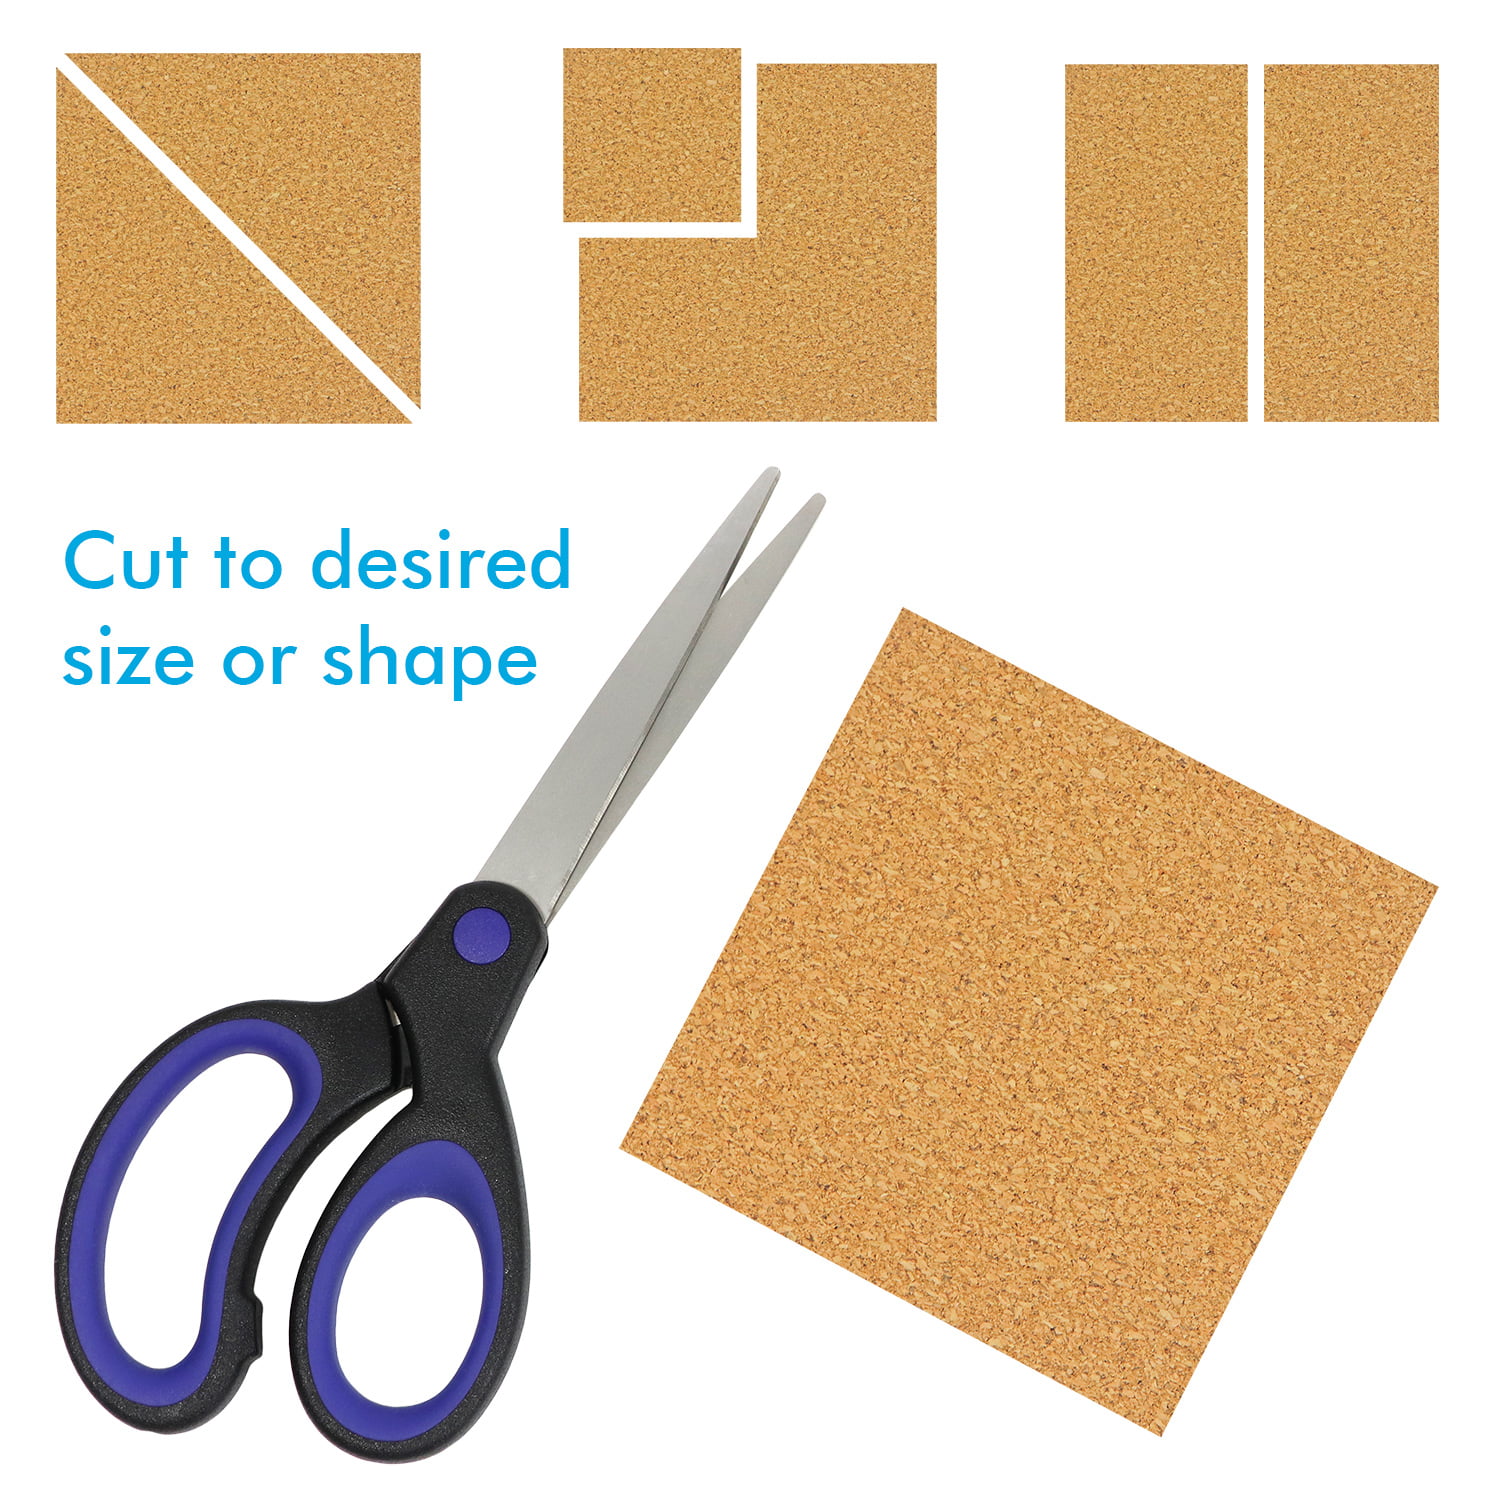 Blisstime 80 Pcs Self-Adhesive Cork Sheets 4x 4 for DIY Coasters, Square Cork Coasters, Cork tiles, Cork Mats, Mini Wall Cork Tiles with Strong